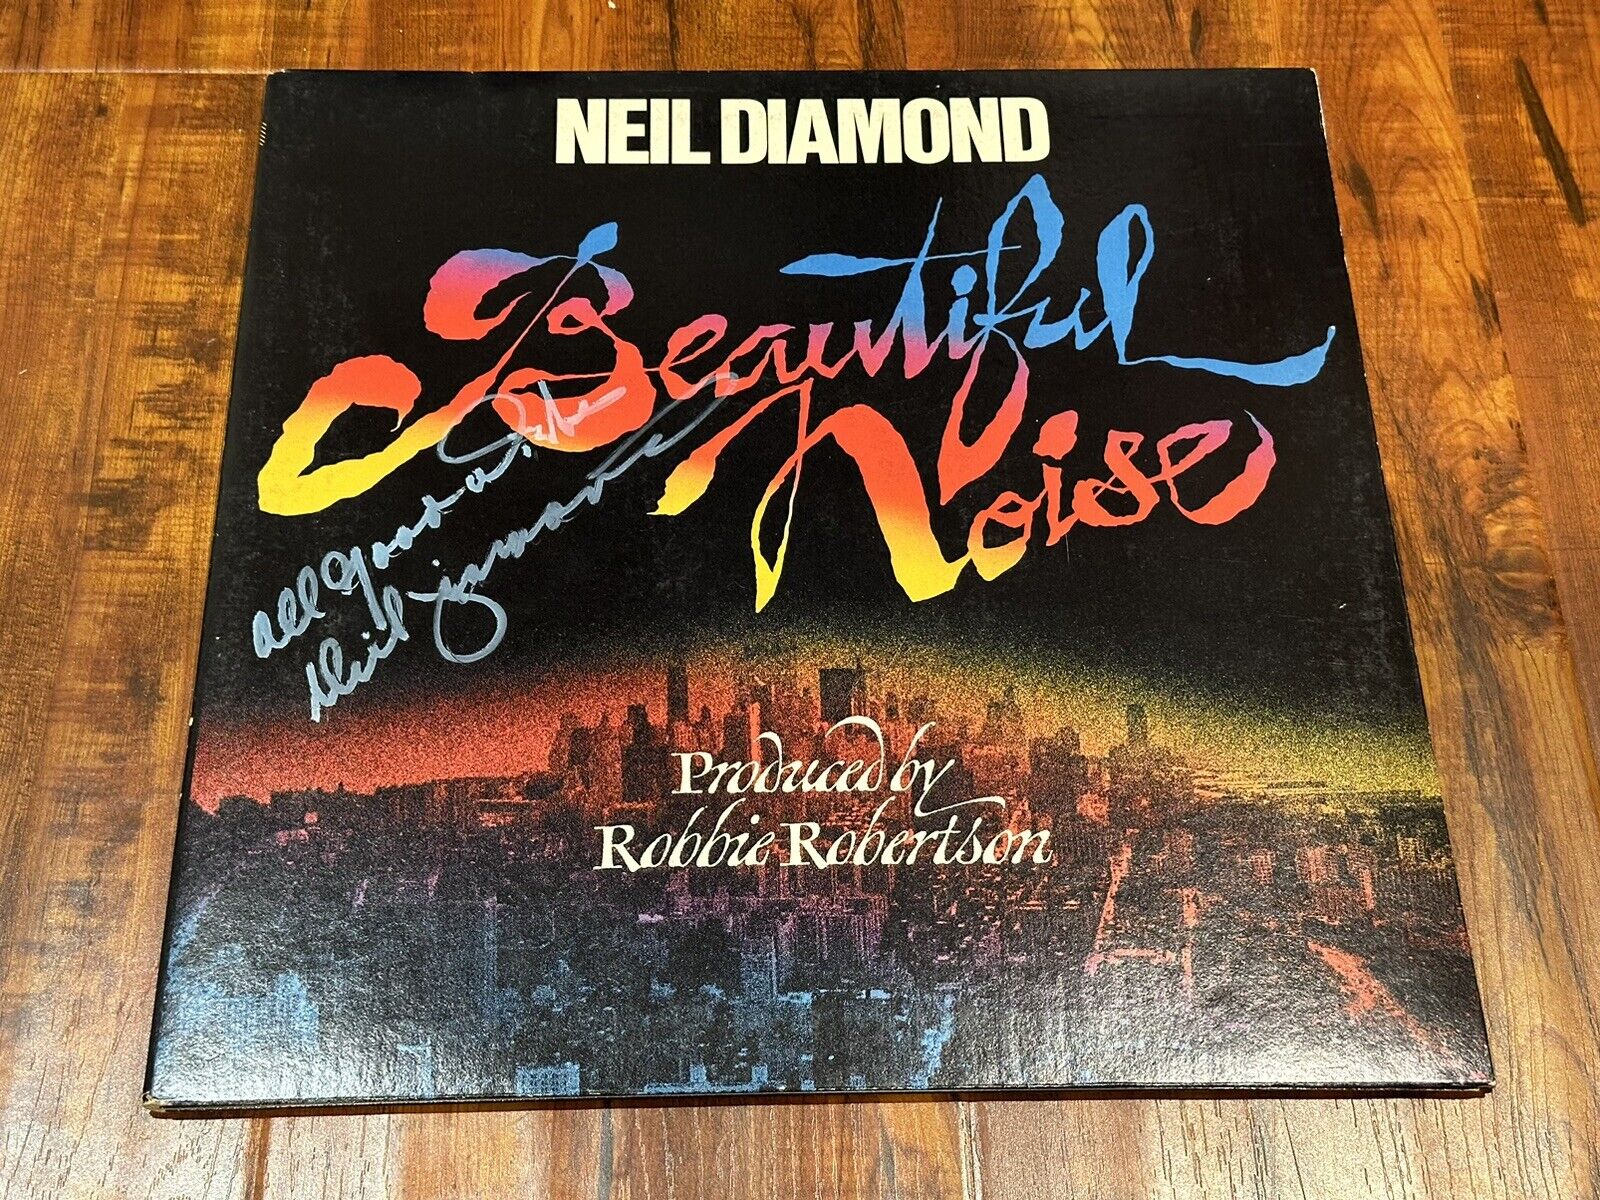 Vintage 1976 Neil Diamond Rare Demo Beautiful Noise Vinyl Record LP - Signed